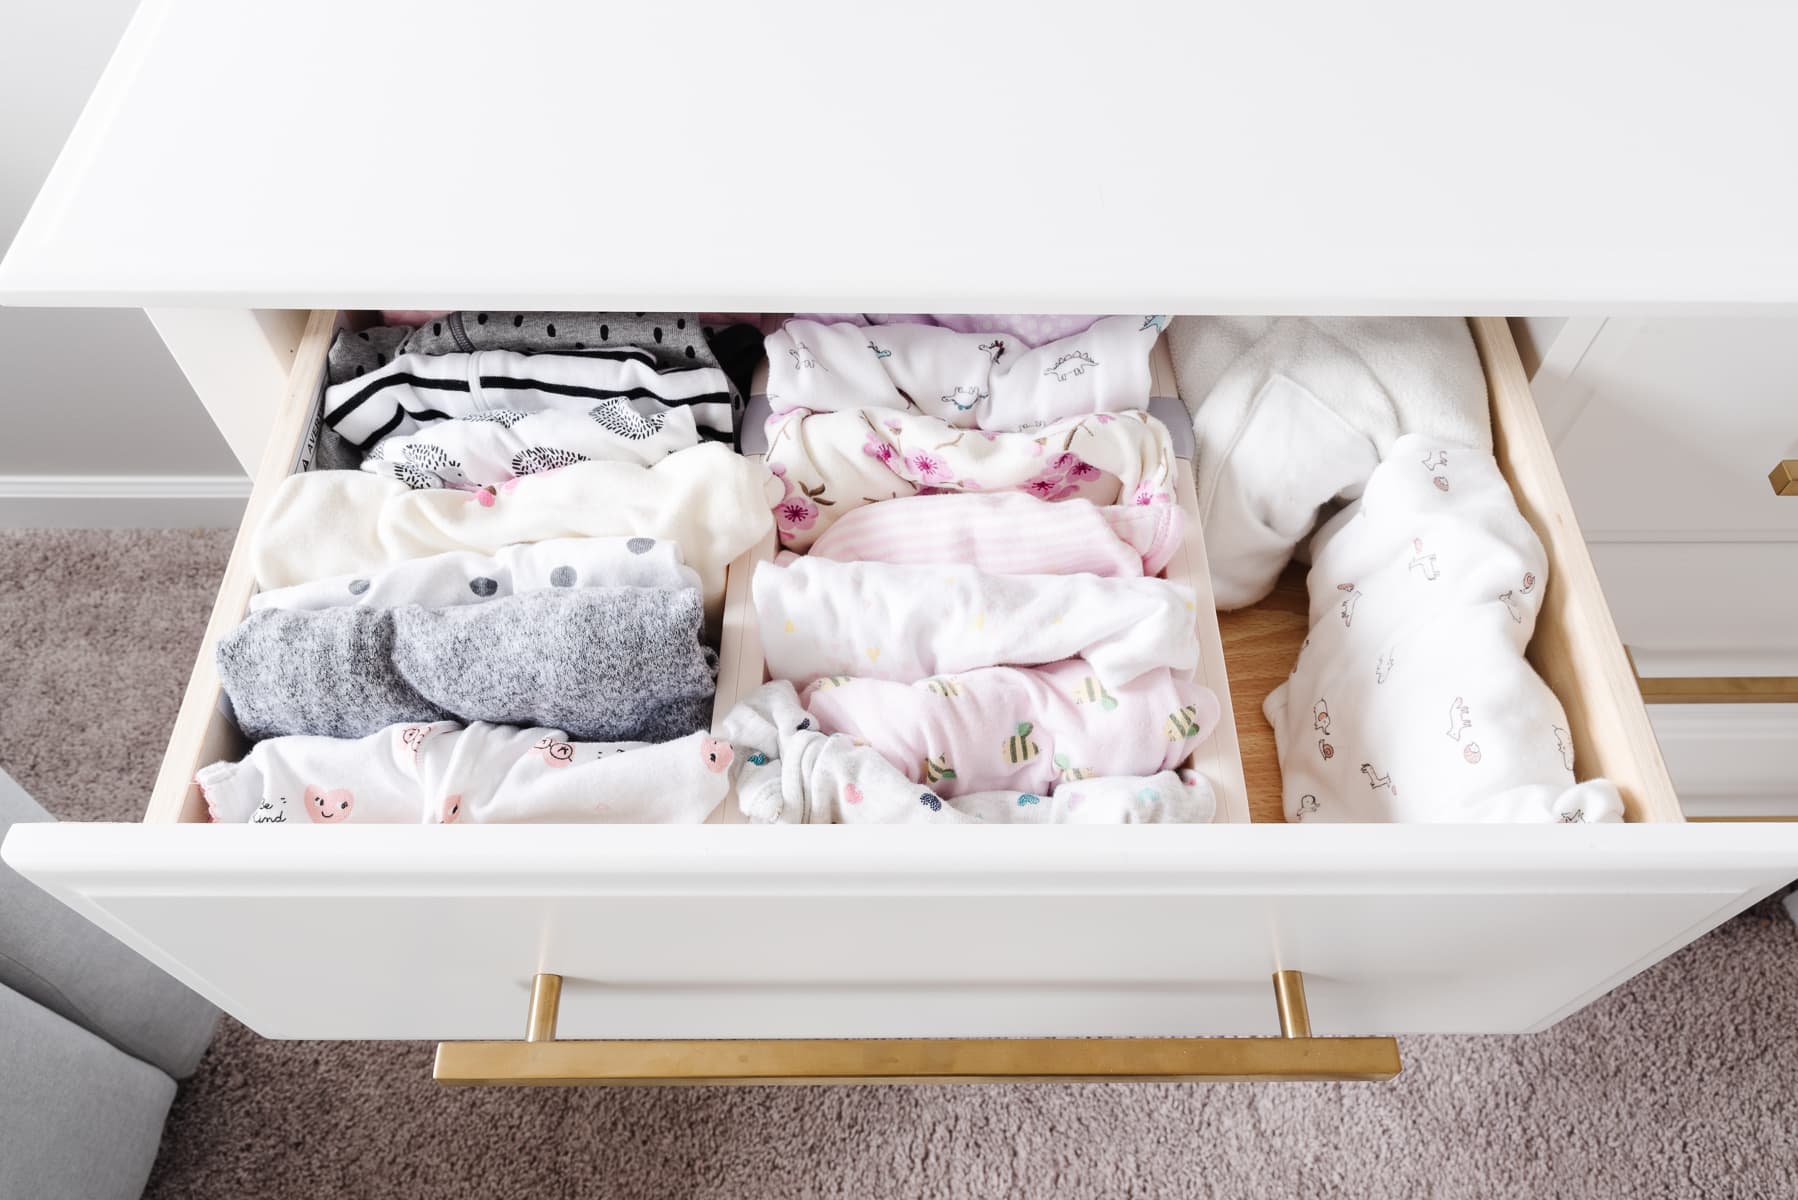 10 Popular Nursery Drawer Organizers that Maximize Storage - One